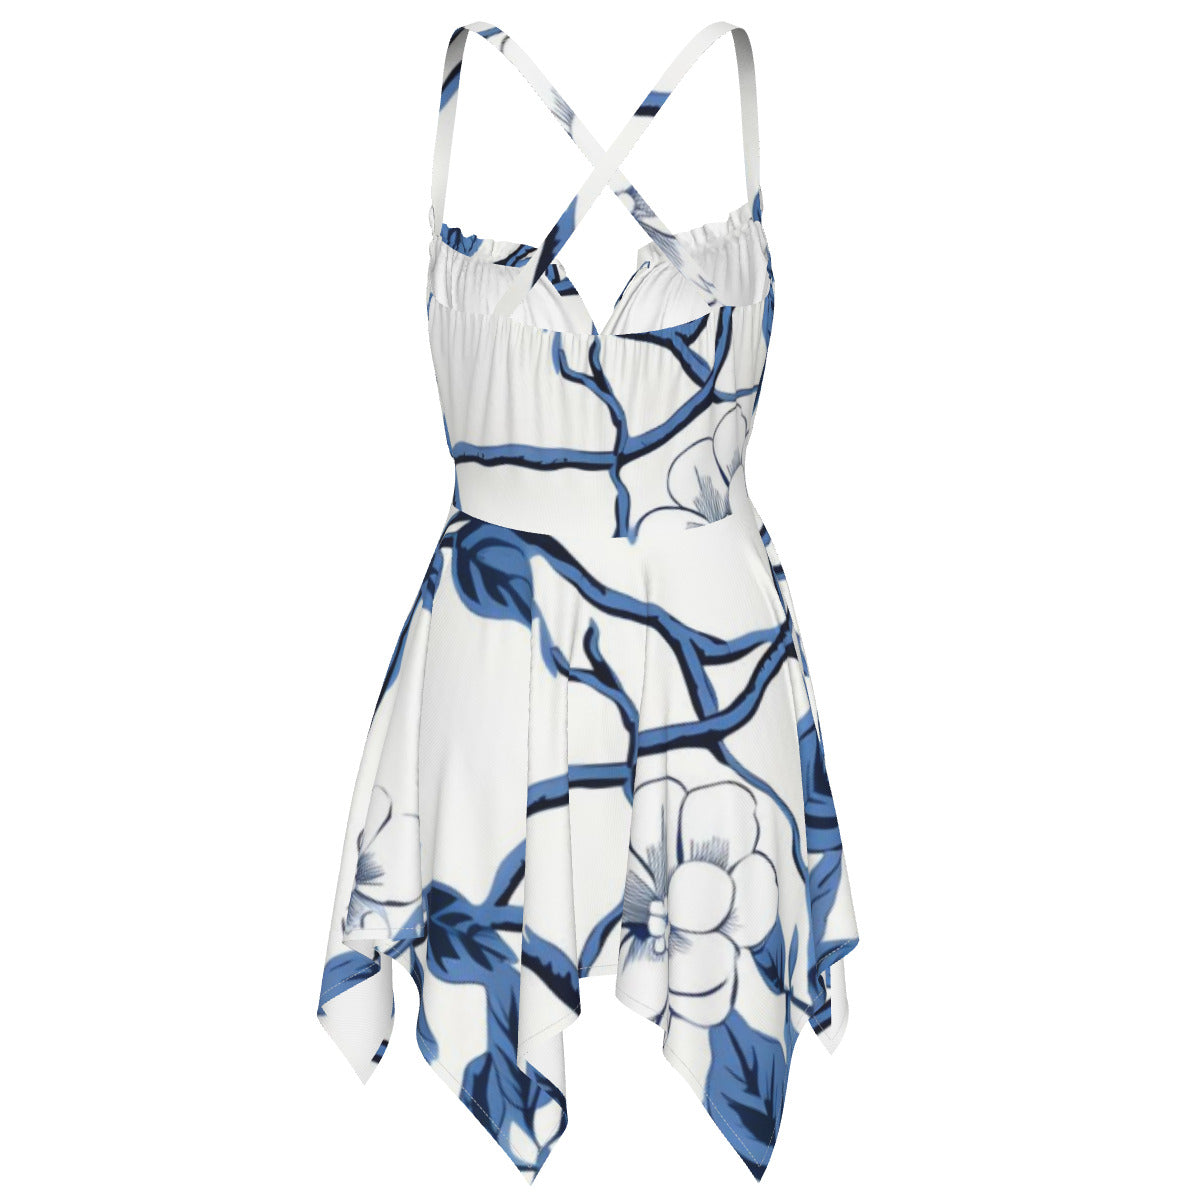 Blue and White Floral Slip Dress